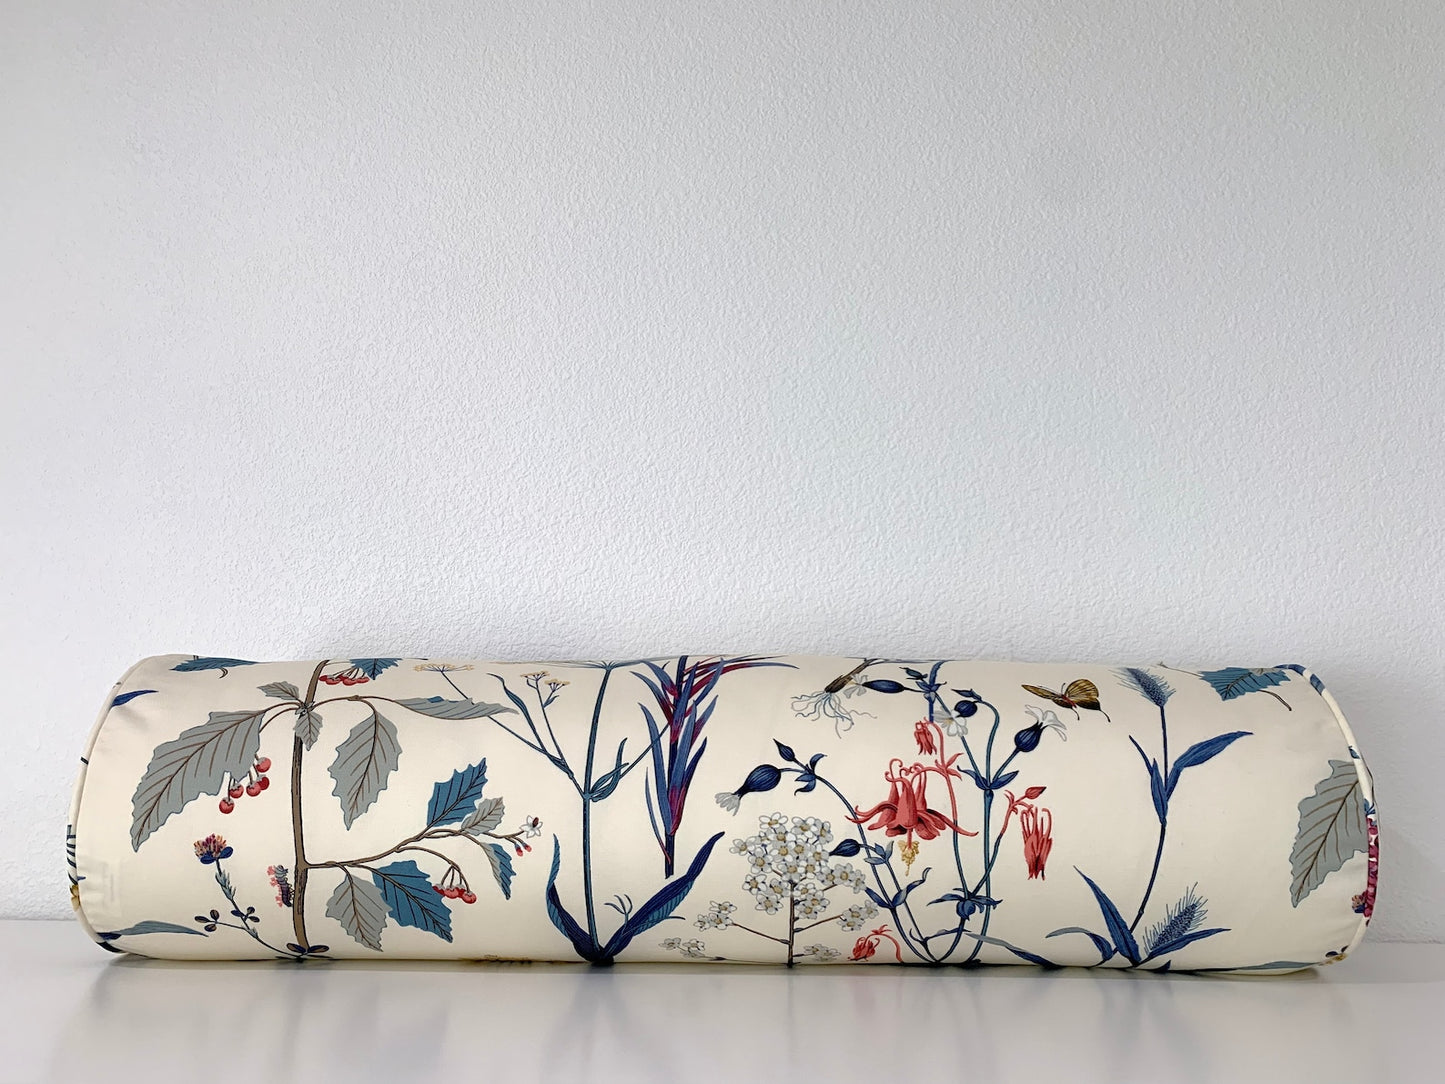 Ballard Designs Isabella Pillow Cover in Blue - Available in Bolster, Lumbar, Throw, Euro Sham Sizes - Long Decorative Lumbar Throw Pillow Cover